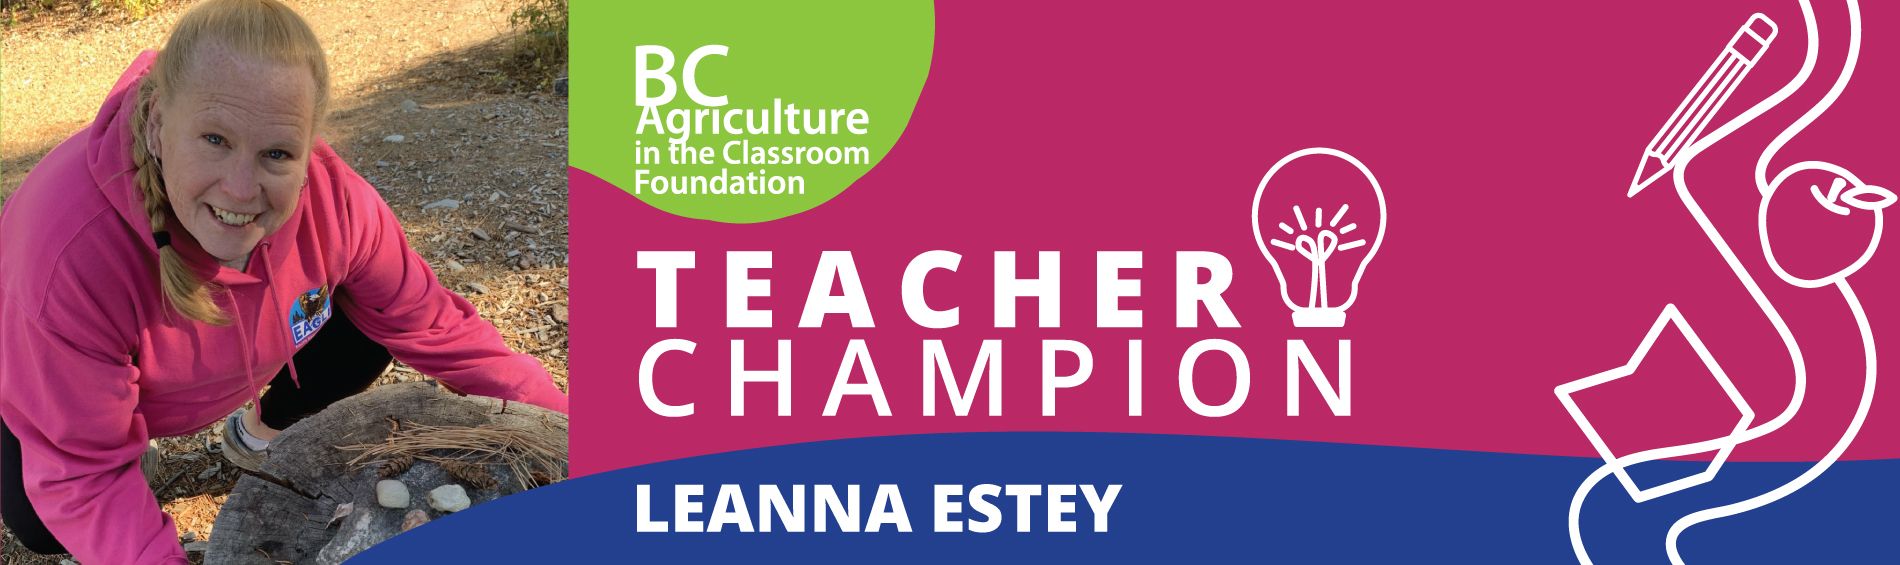 Teacher Champion - Leanna Estey